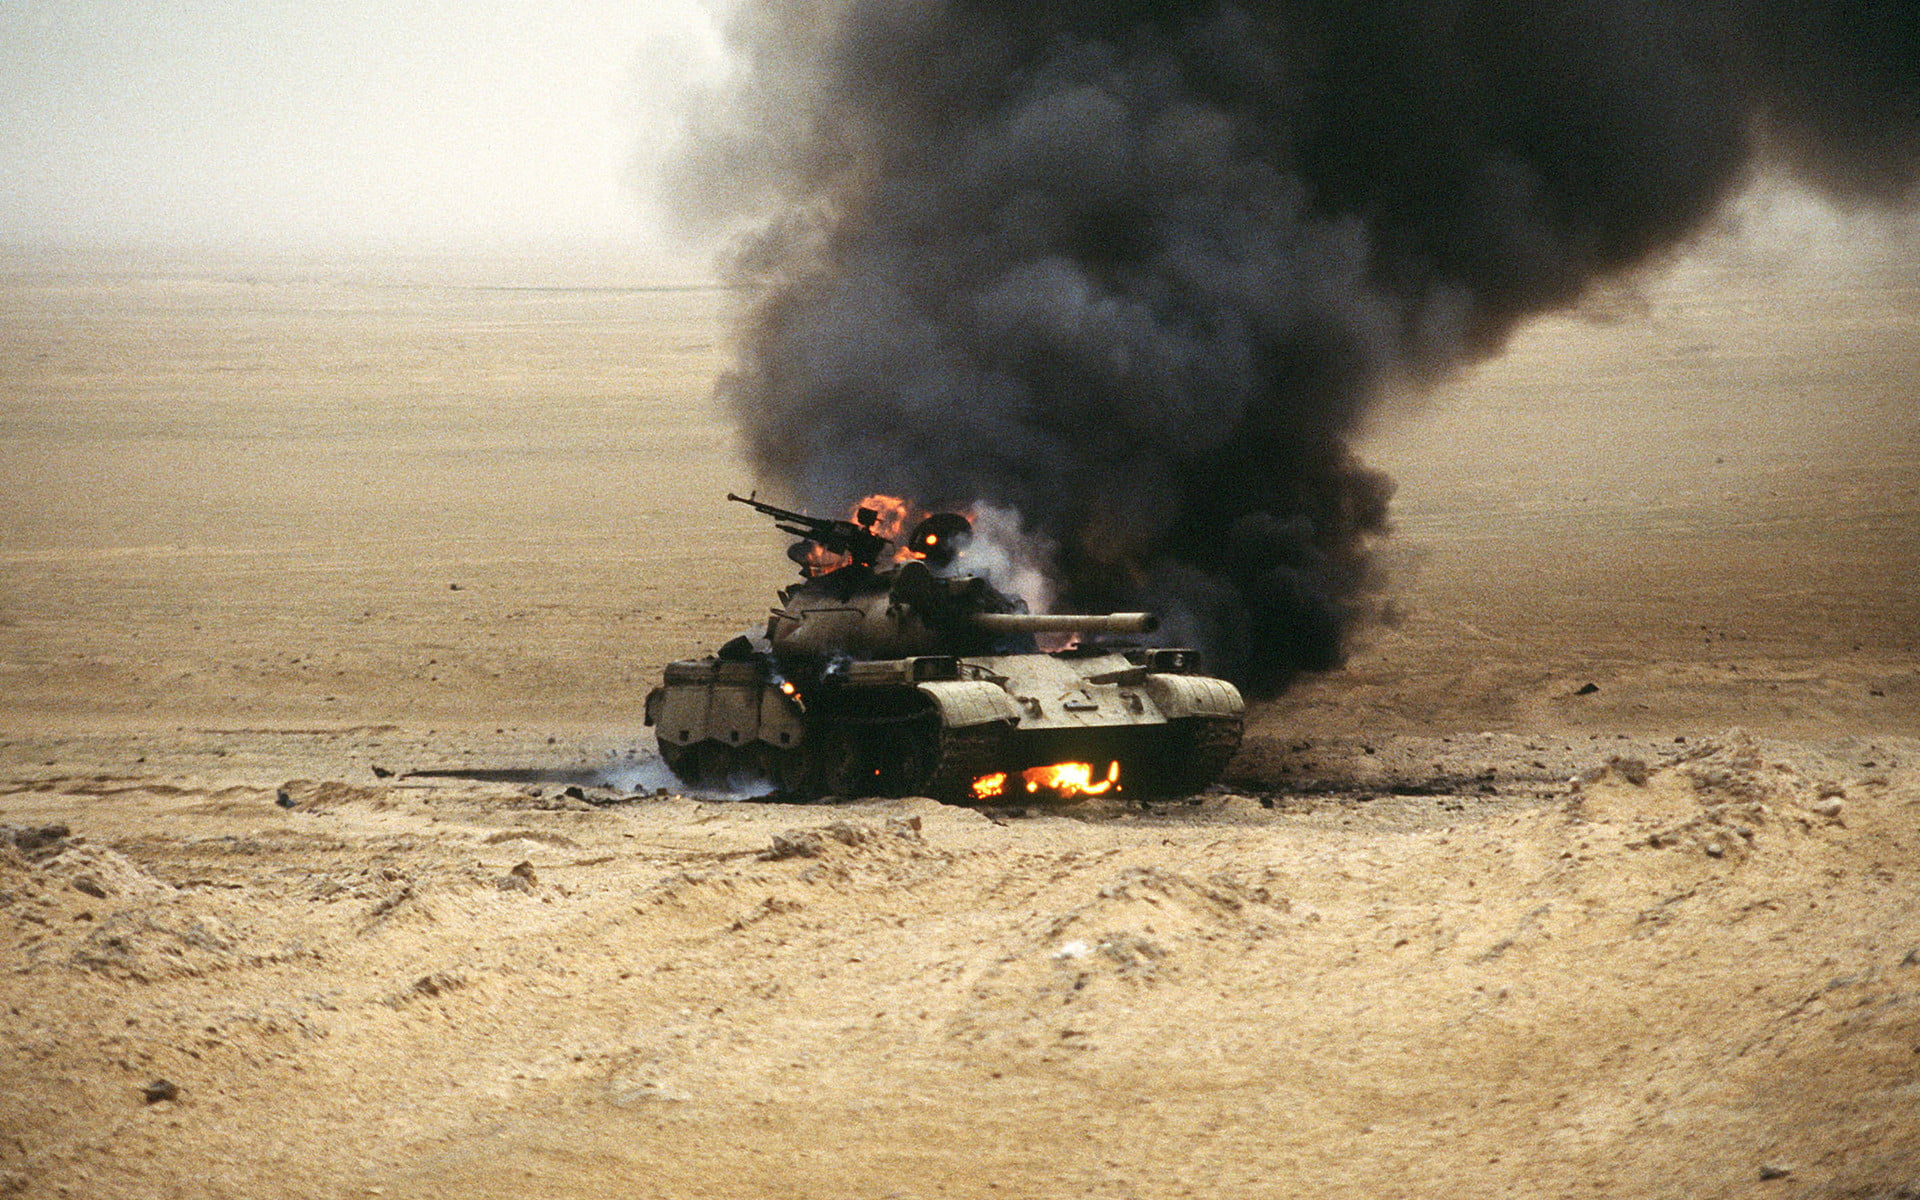 beige battle tank, fire, war, Iraq, T-54, fire - Natural Phenomenon